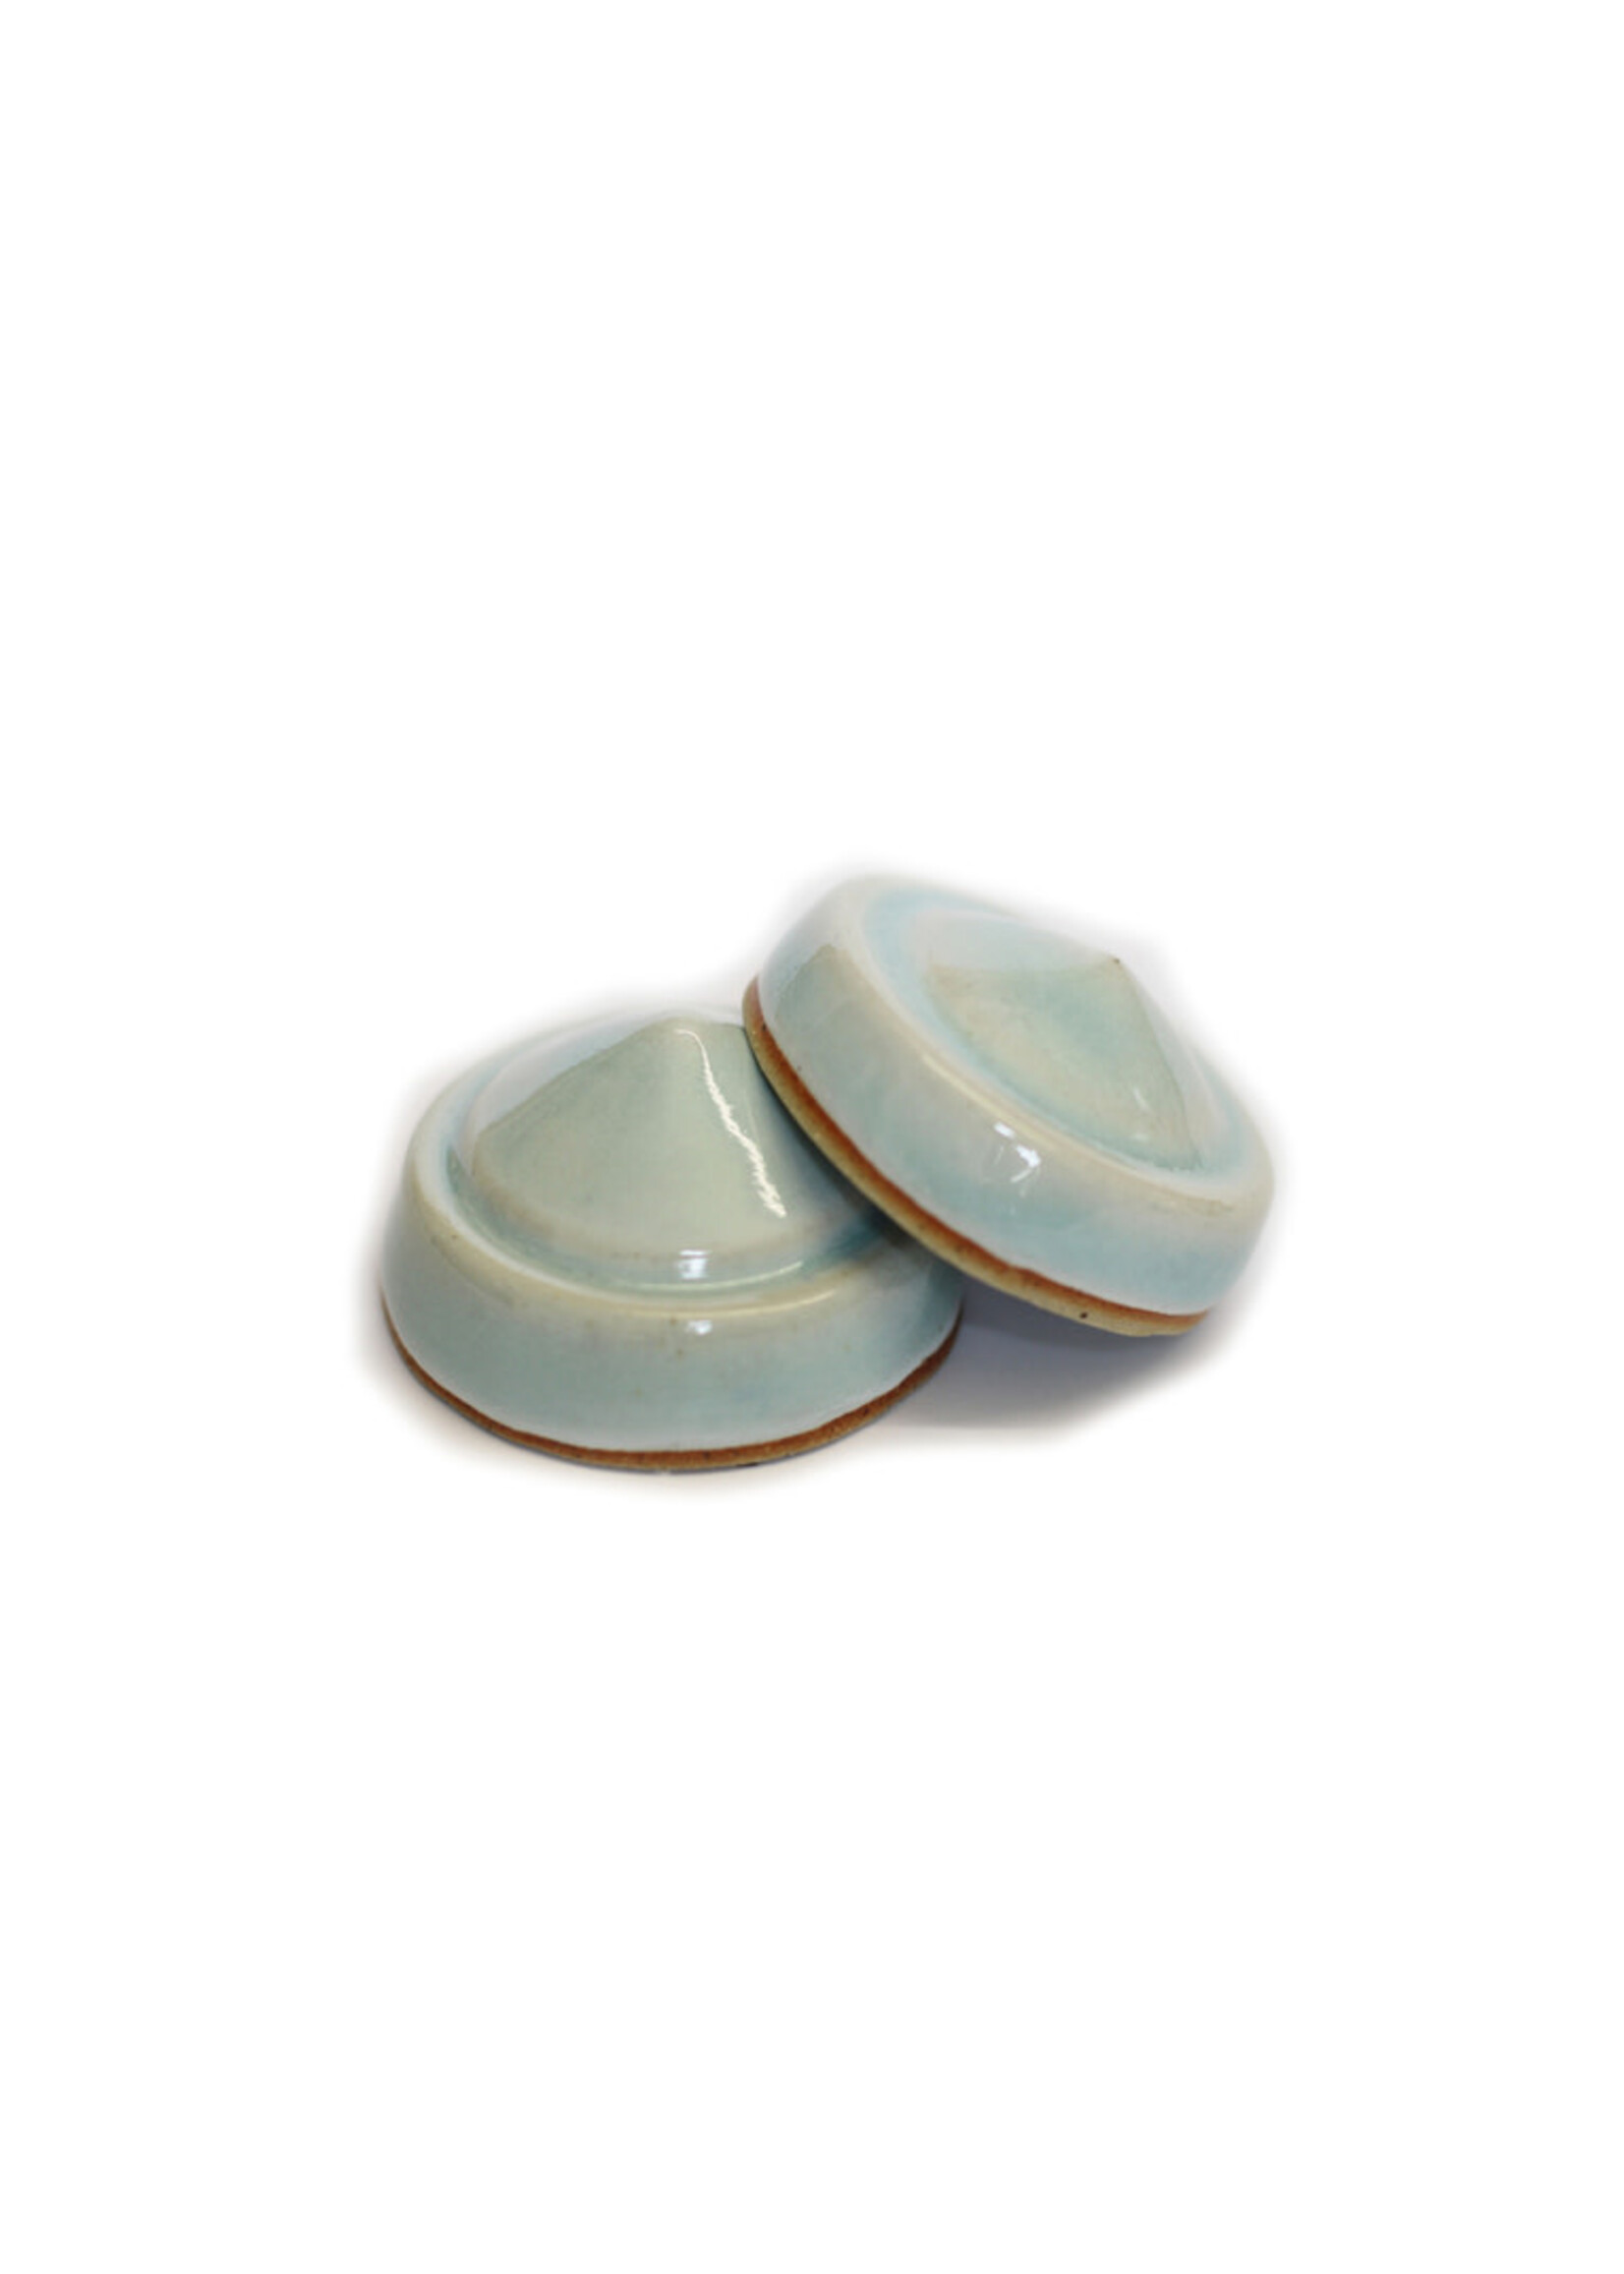 Ceramic underglaze pencils - Bluematchbox Potters Supplies Ltd